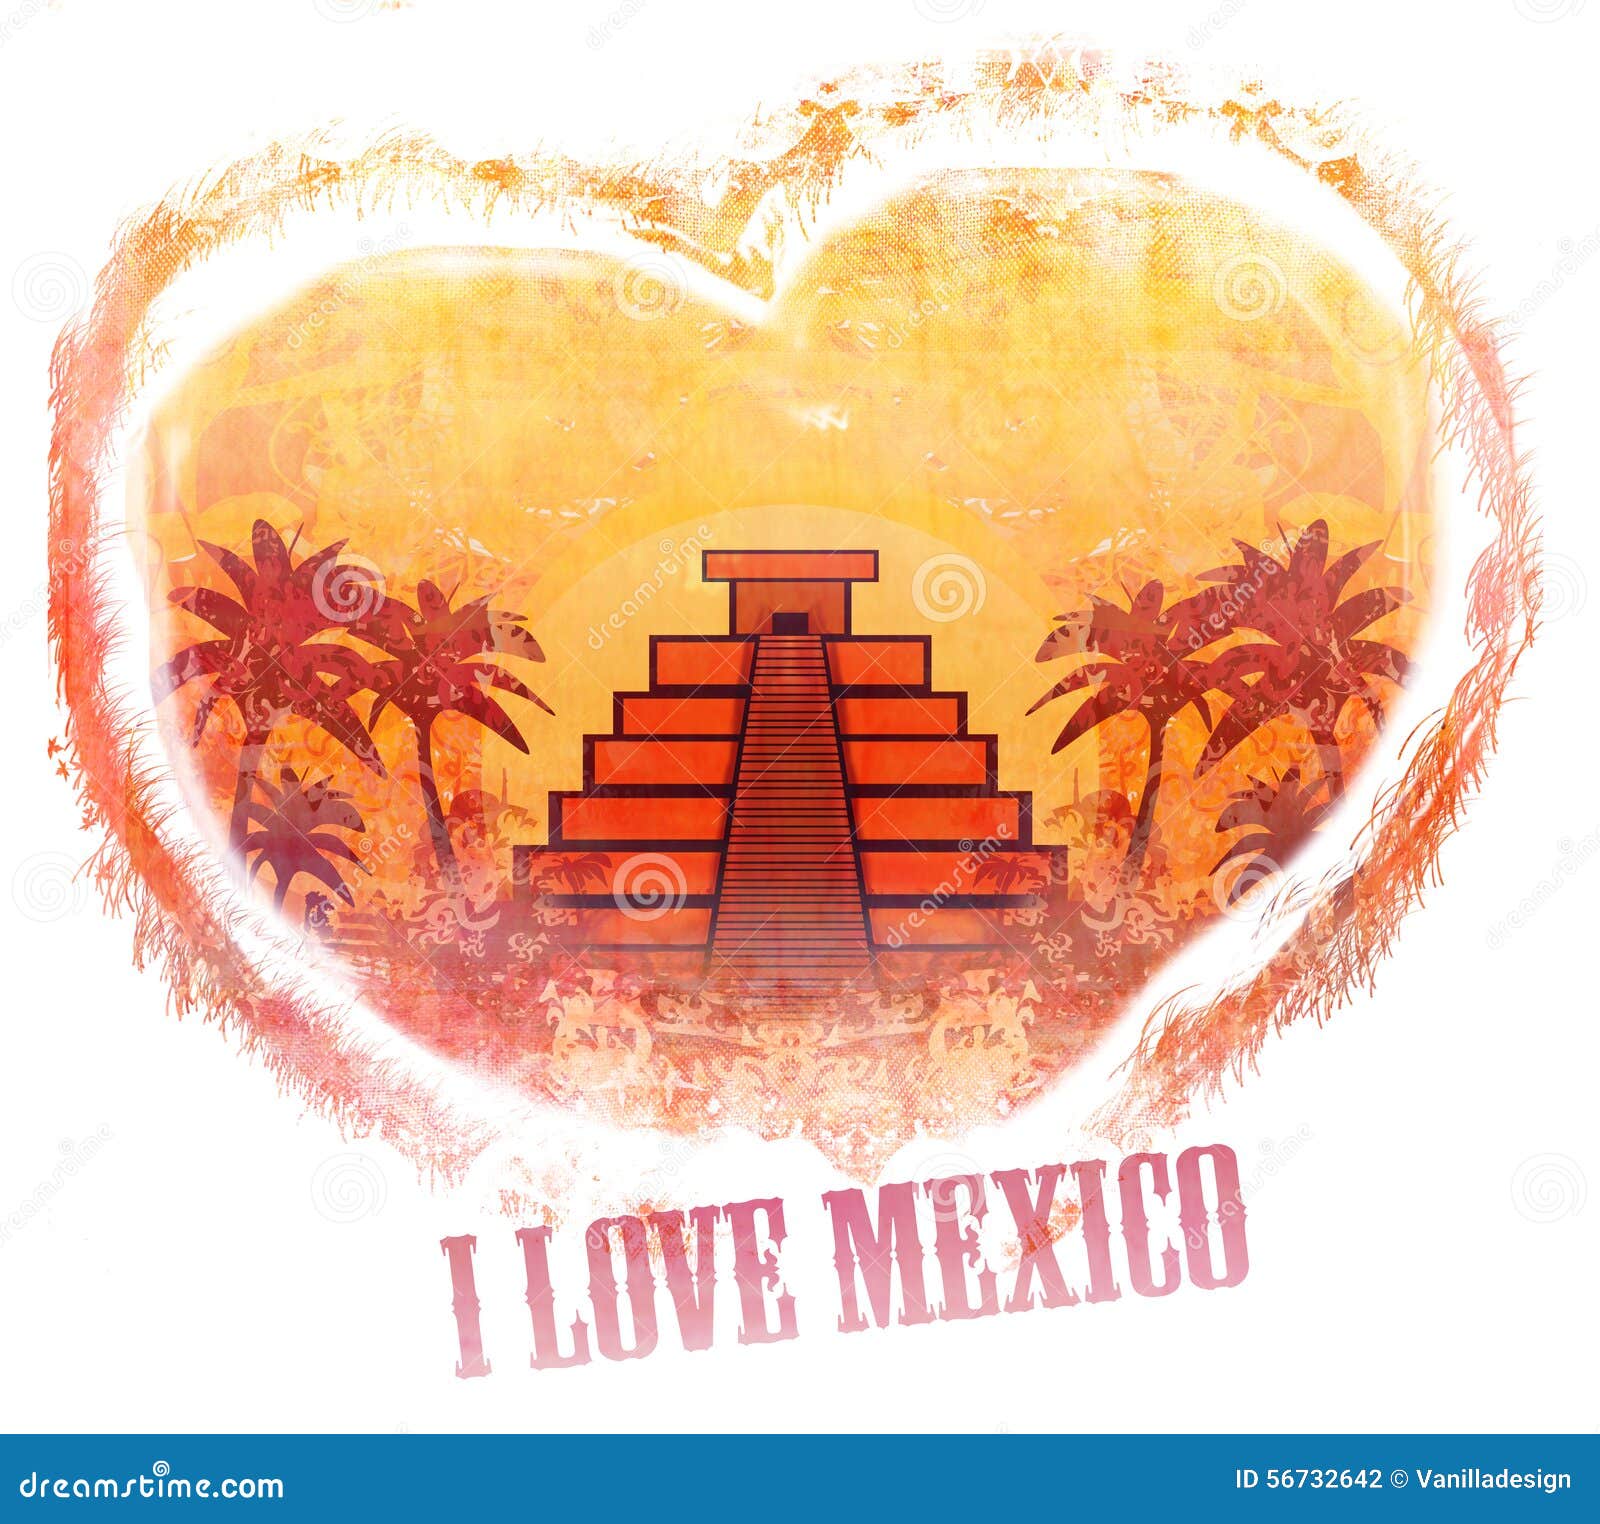 I Love Mexico design stock illustration. Illustration of culture - 56732642